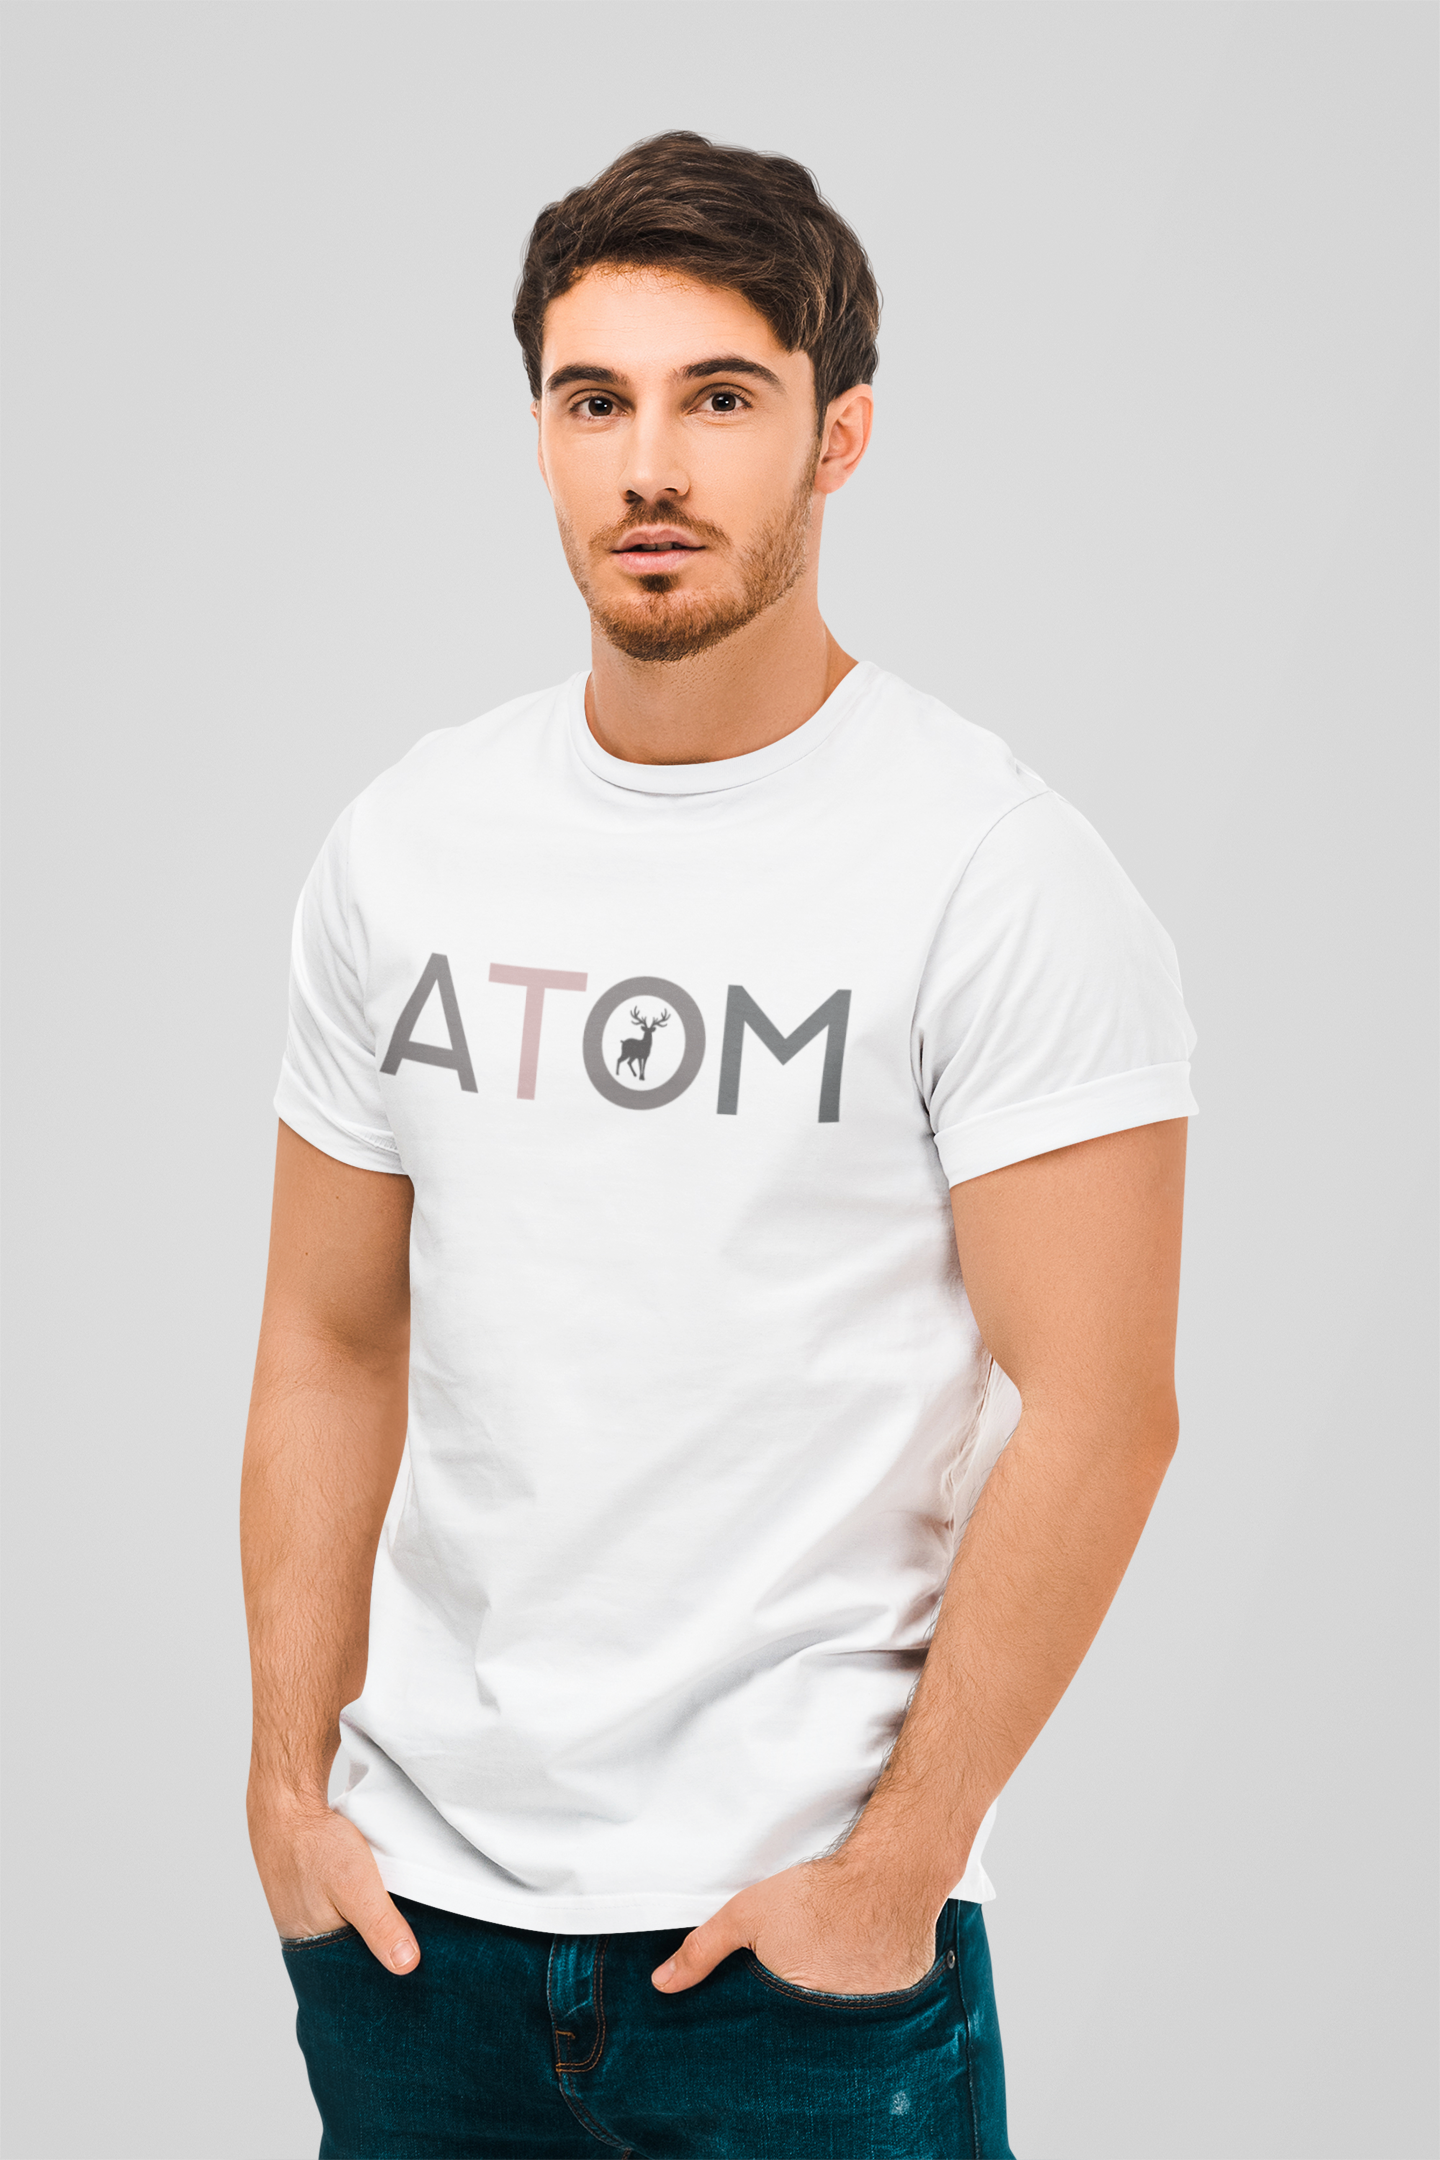 ATOM Signature Flat Grey Icon White Round Neck T-Shirt for Men.